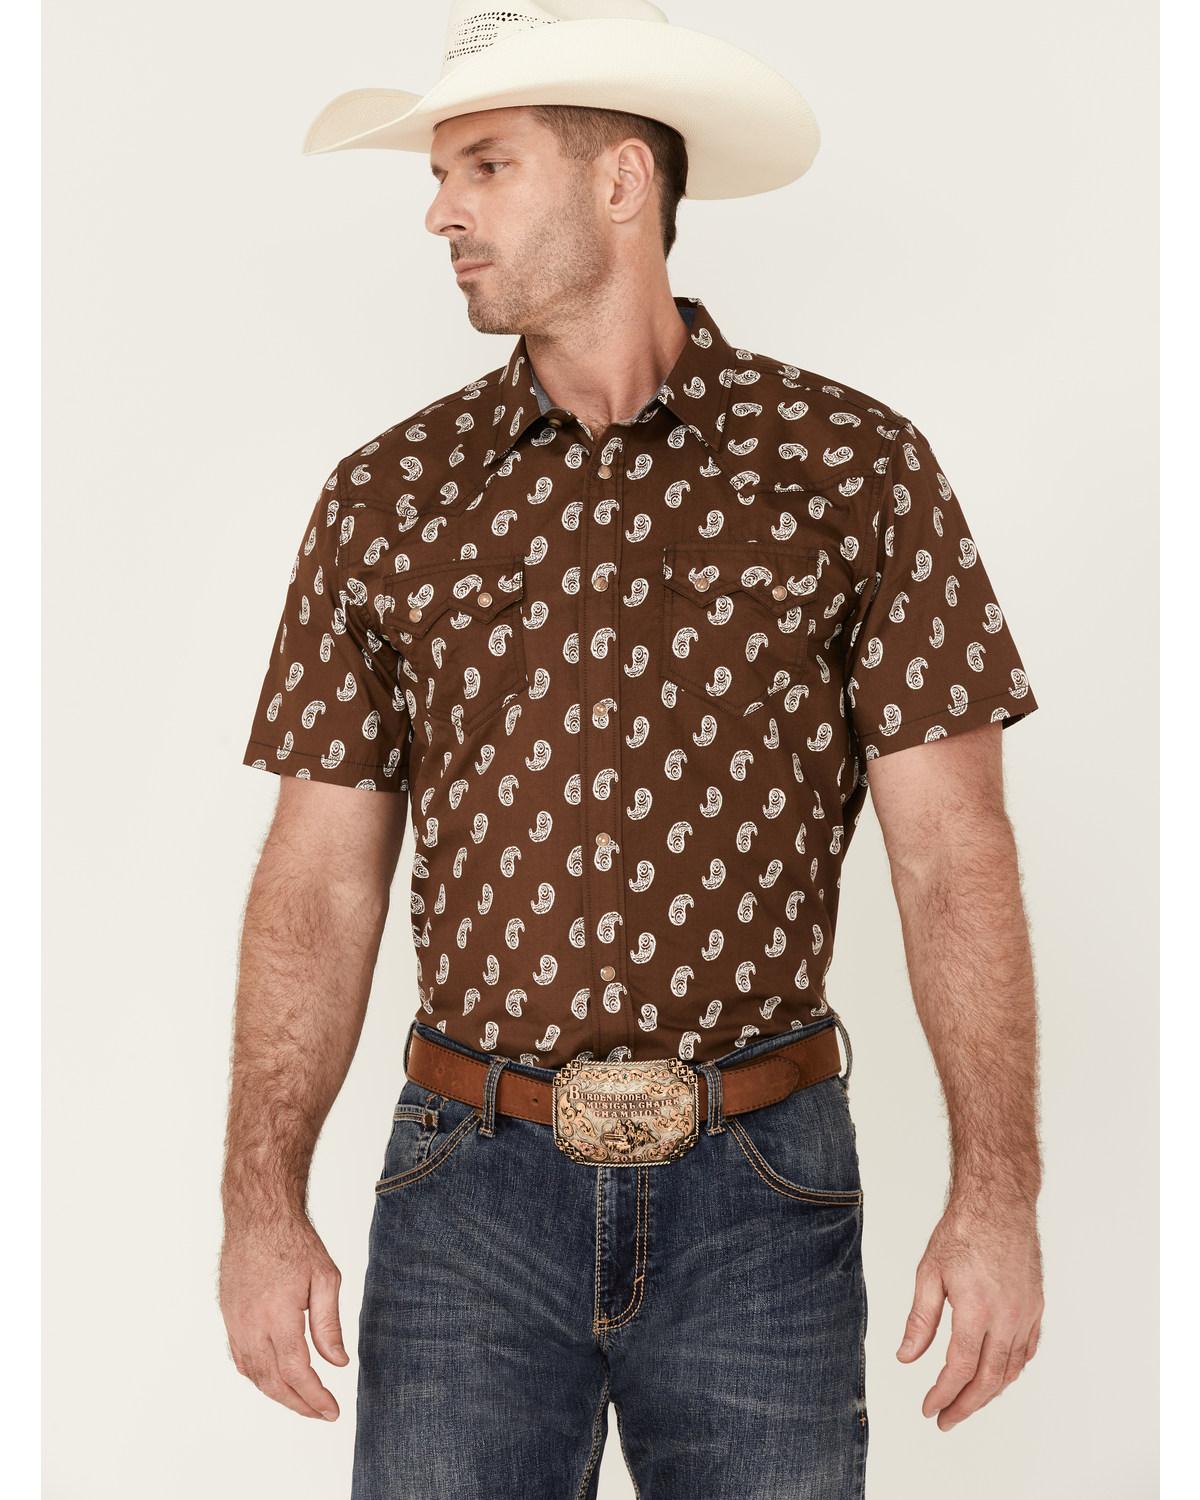 Cody James Men's Jockey Paisley Print Short Sleeve Snap Western Shirt